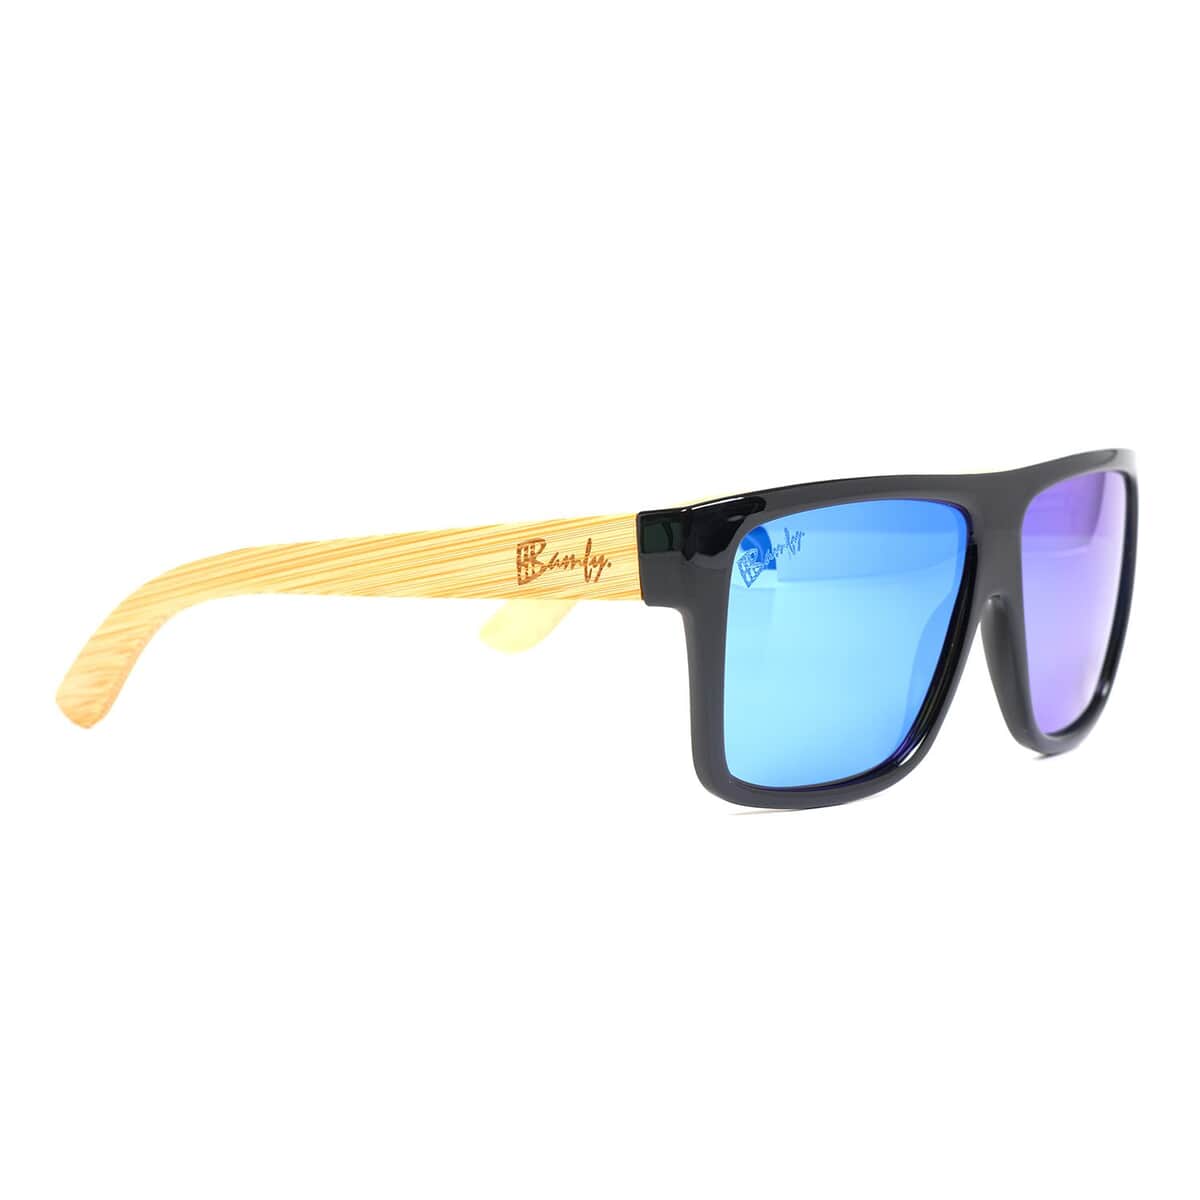 Bamfy Oakland UV400 Polarized Sunglasses with Bamboo Legs and Case -Blue image number 3